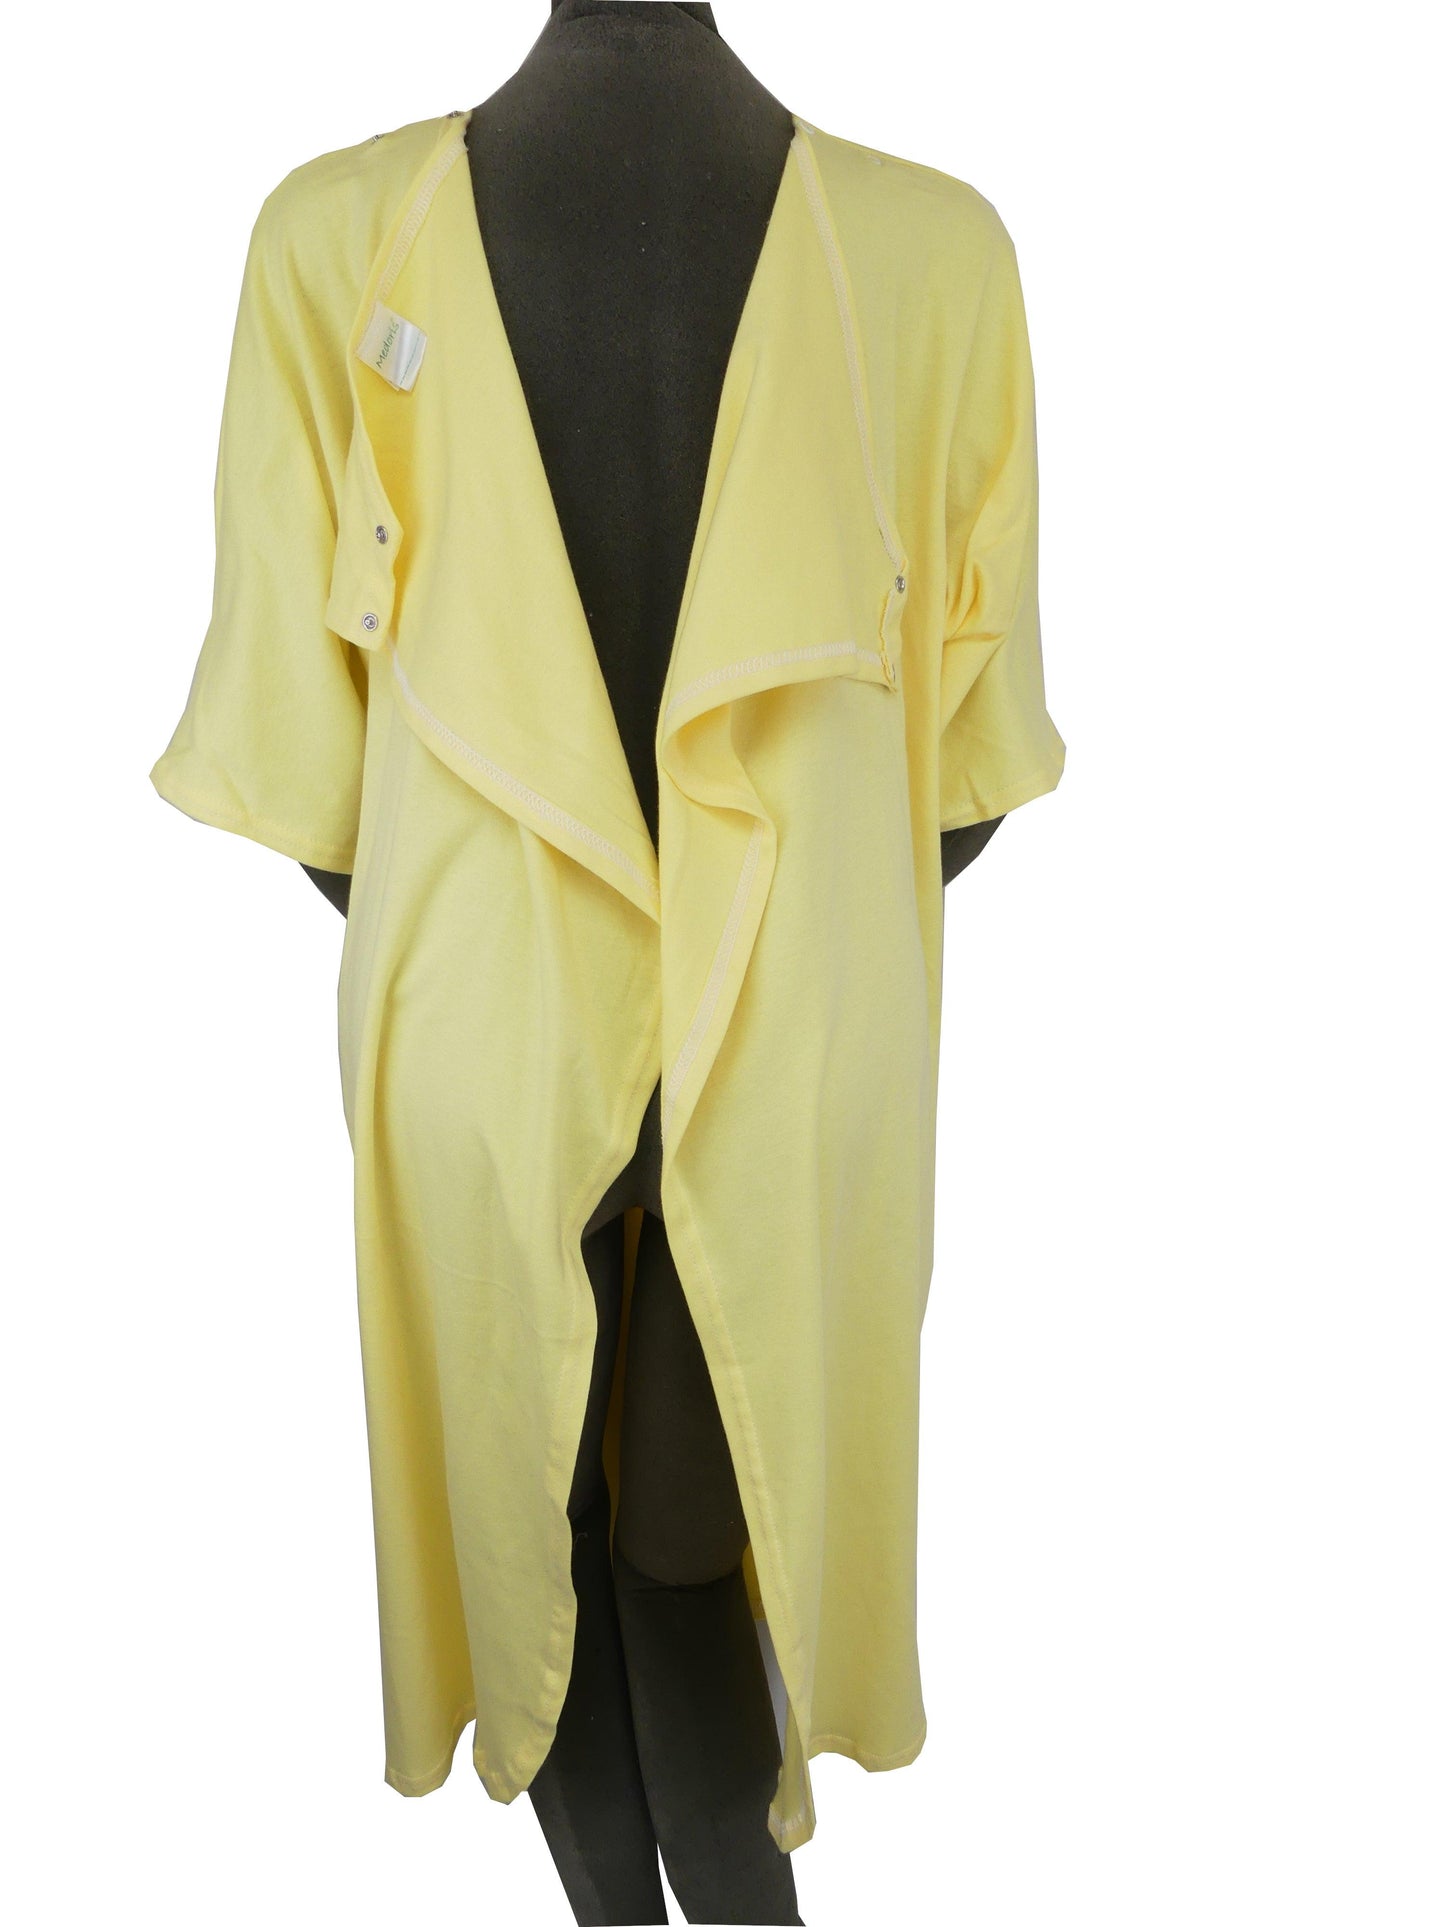 Women's Adaptive Nightwear: 100% Cotton Interlock Completely Open Back Nightgown - M080 - MEDORIS